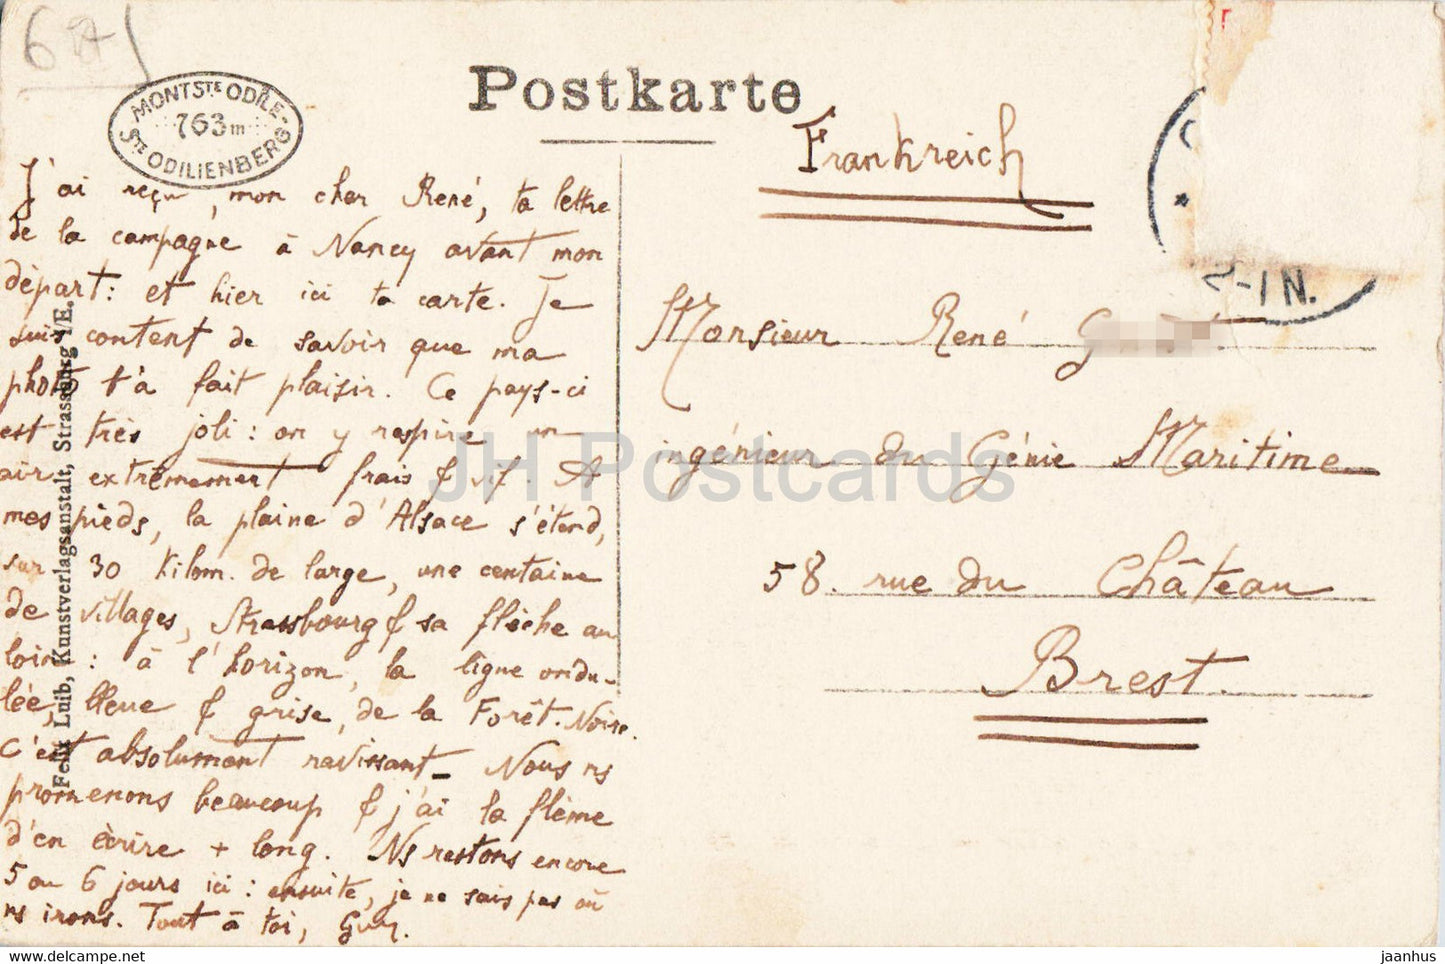 Sankt Odilienkloster - Couvent de Sainte Odile - alte Postkarte - Frankreich - gebraucht